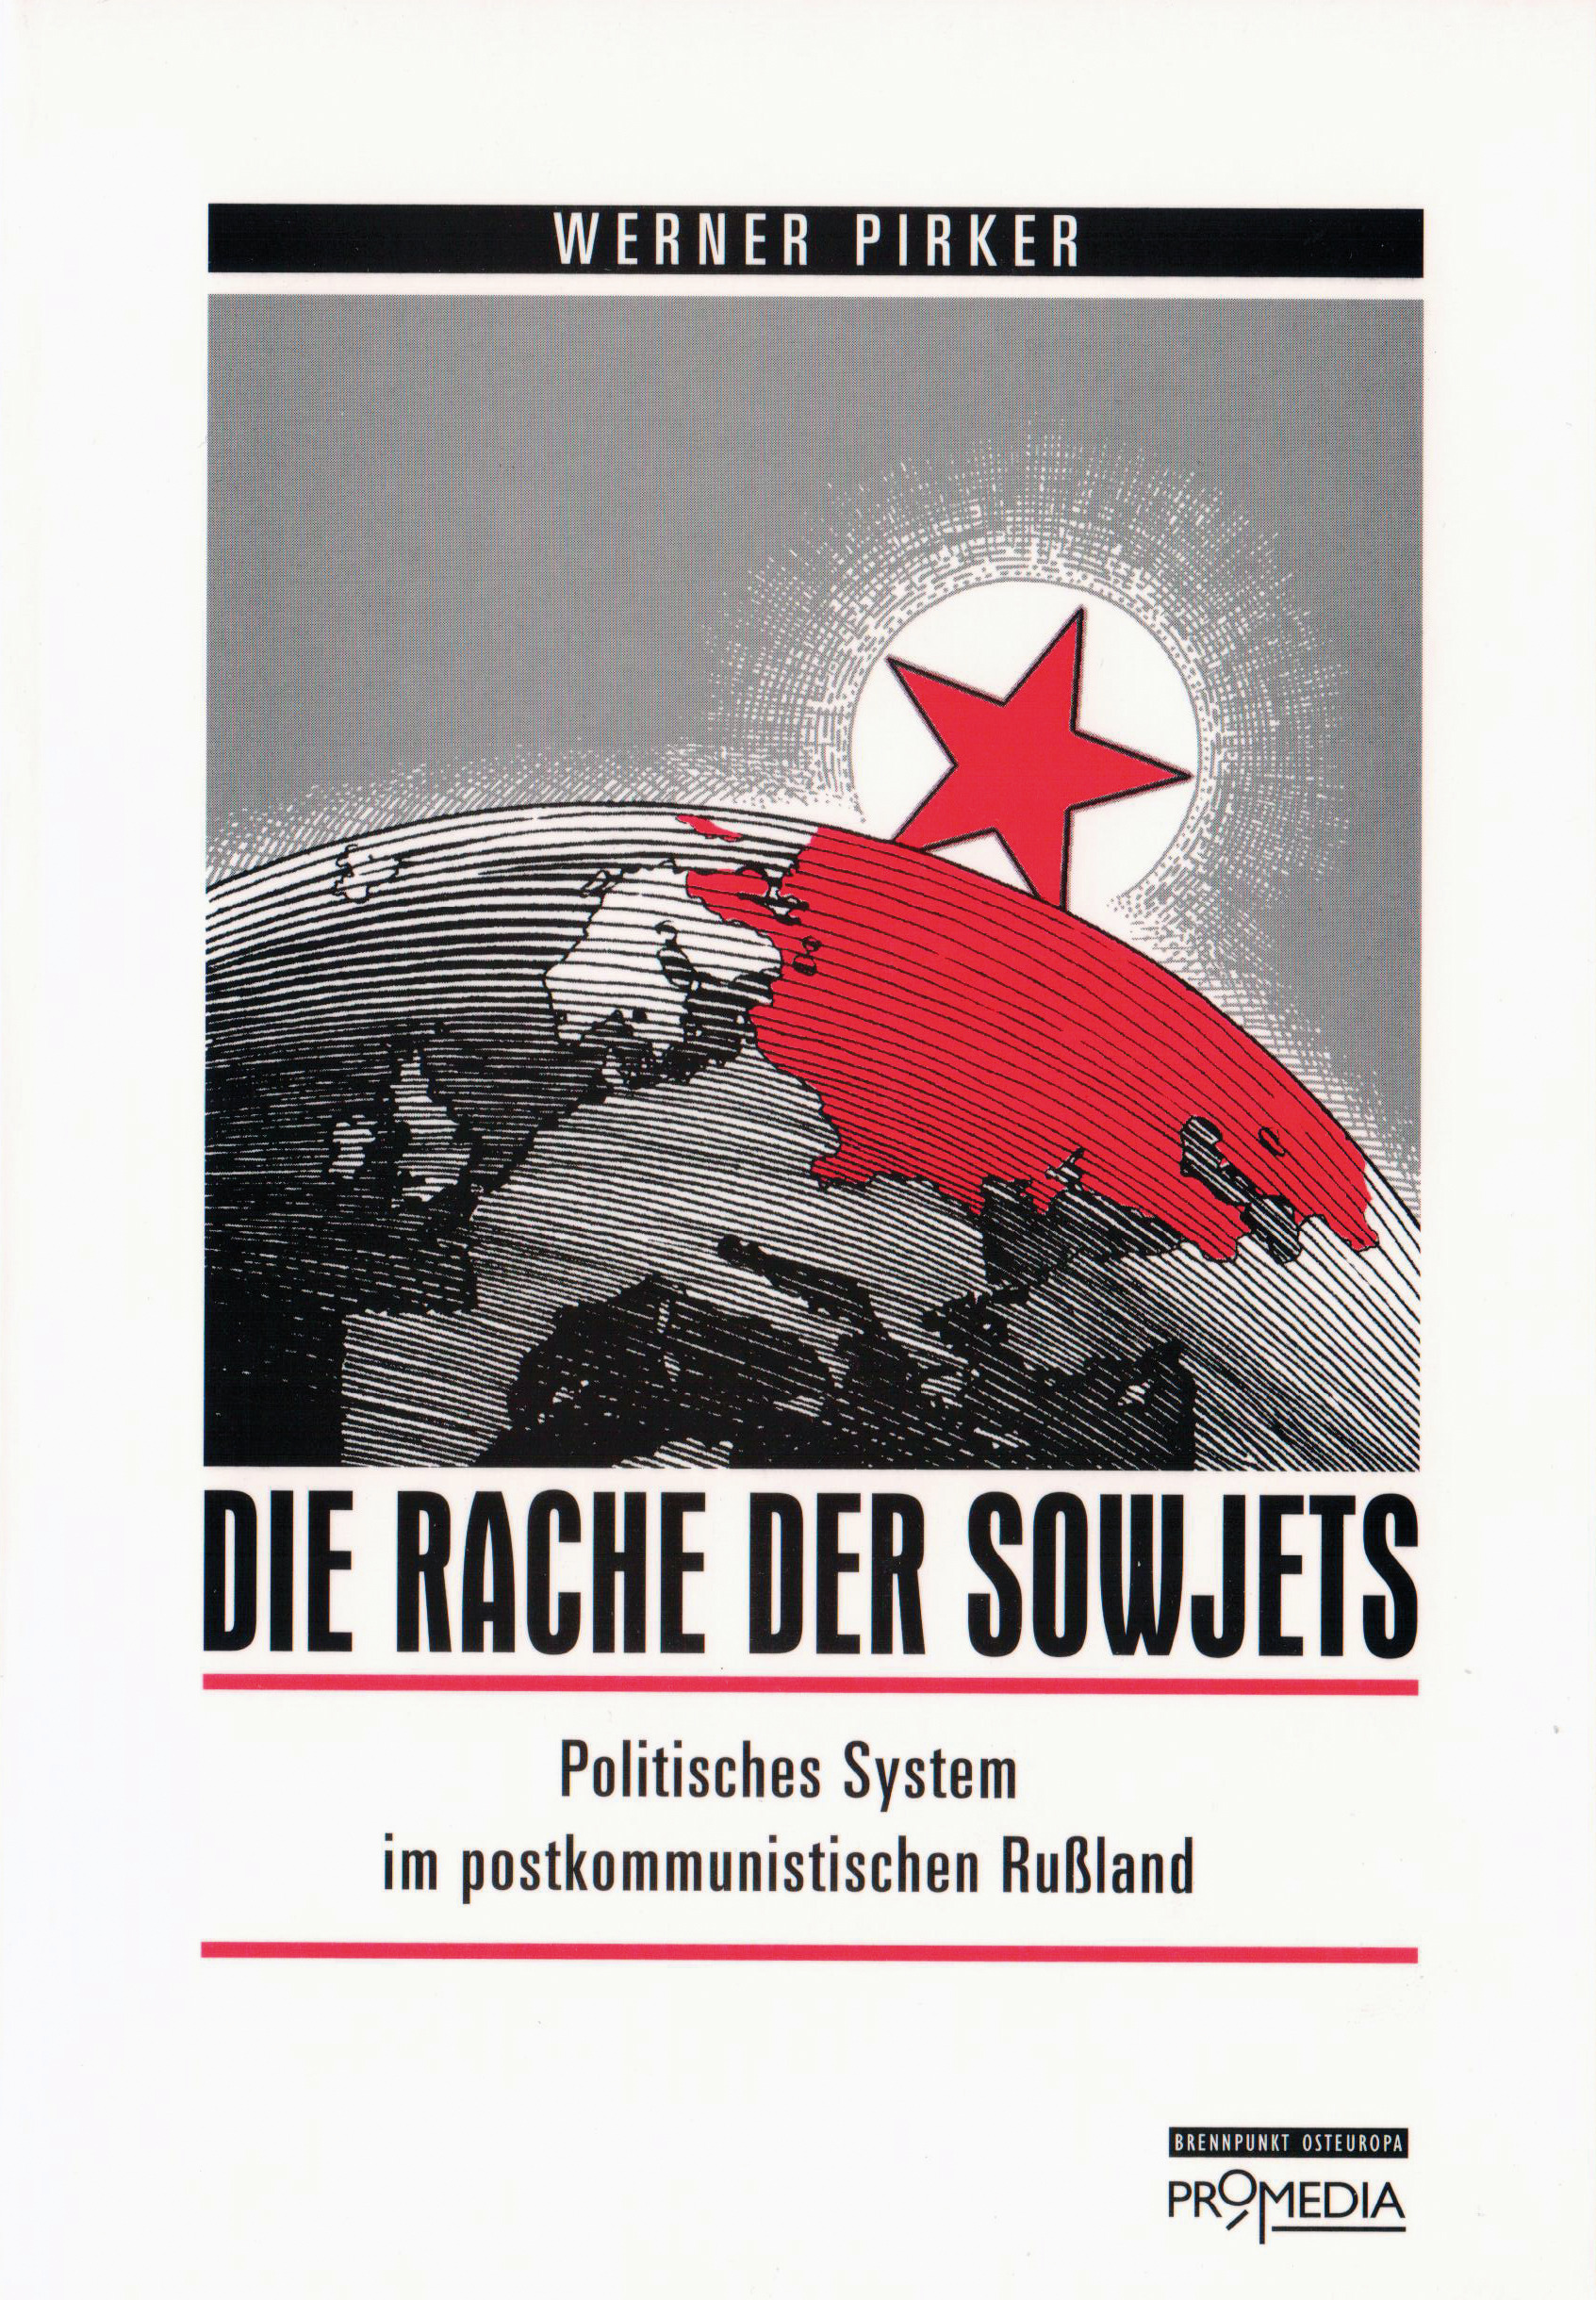 [Cover] Die Rache der Sowjets